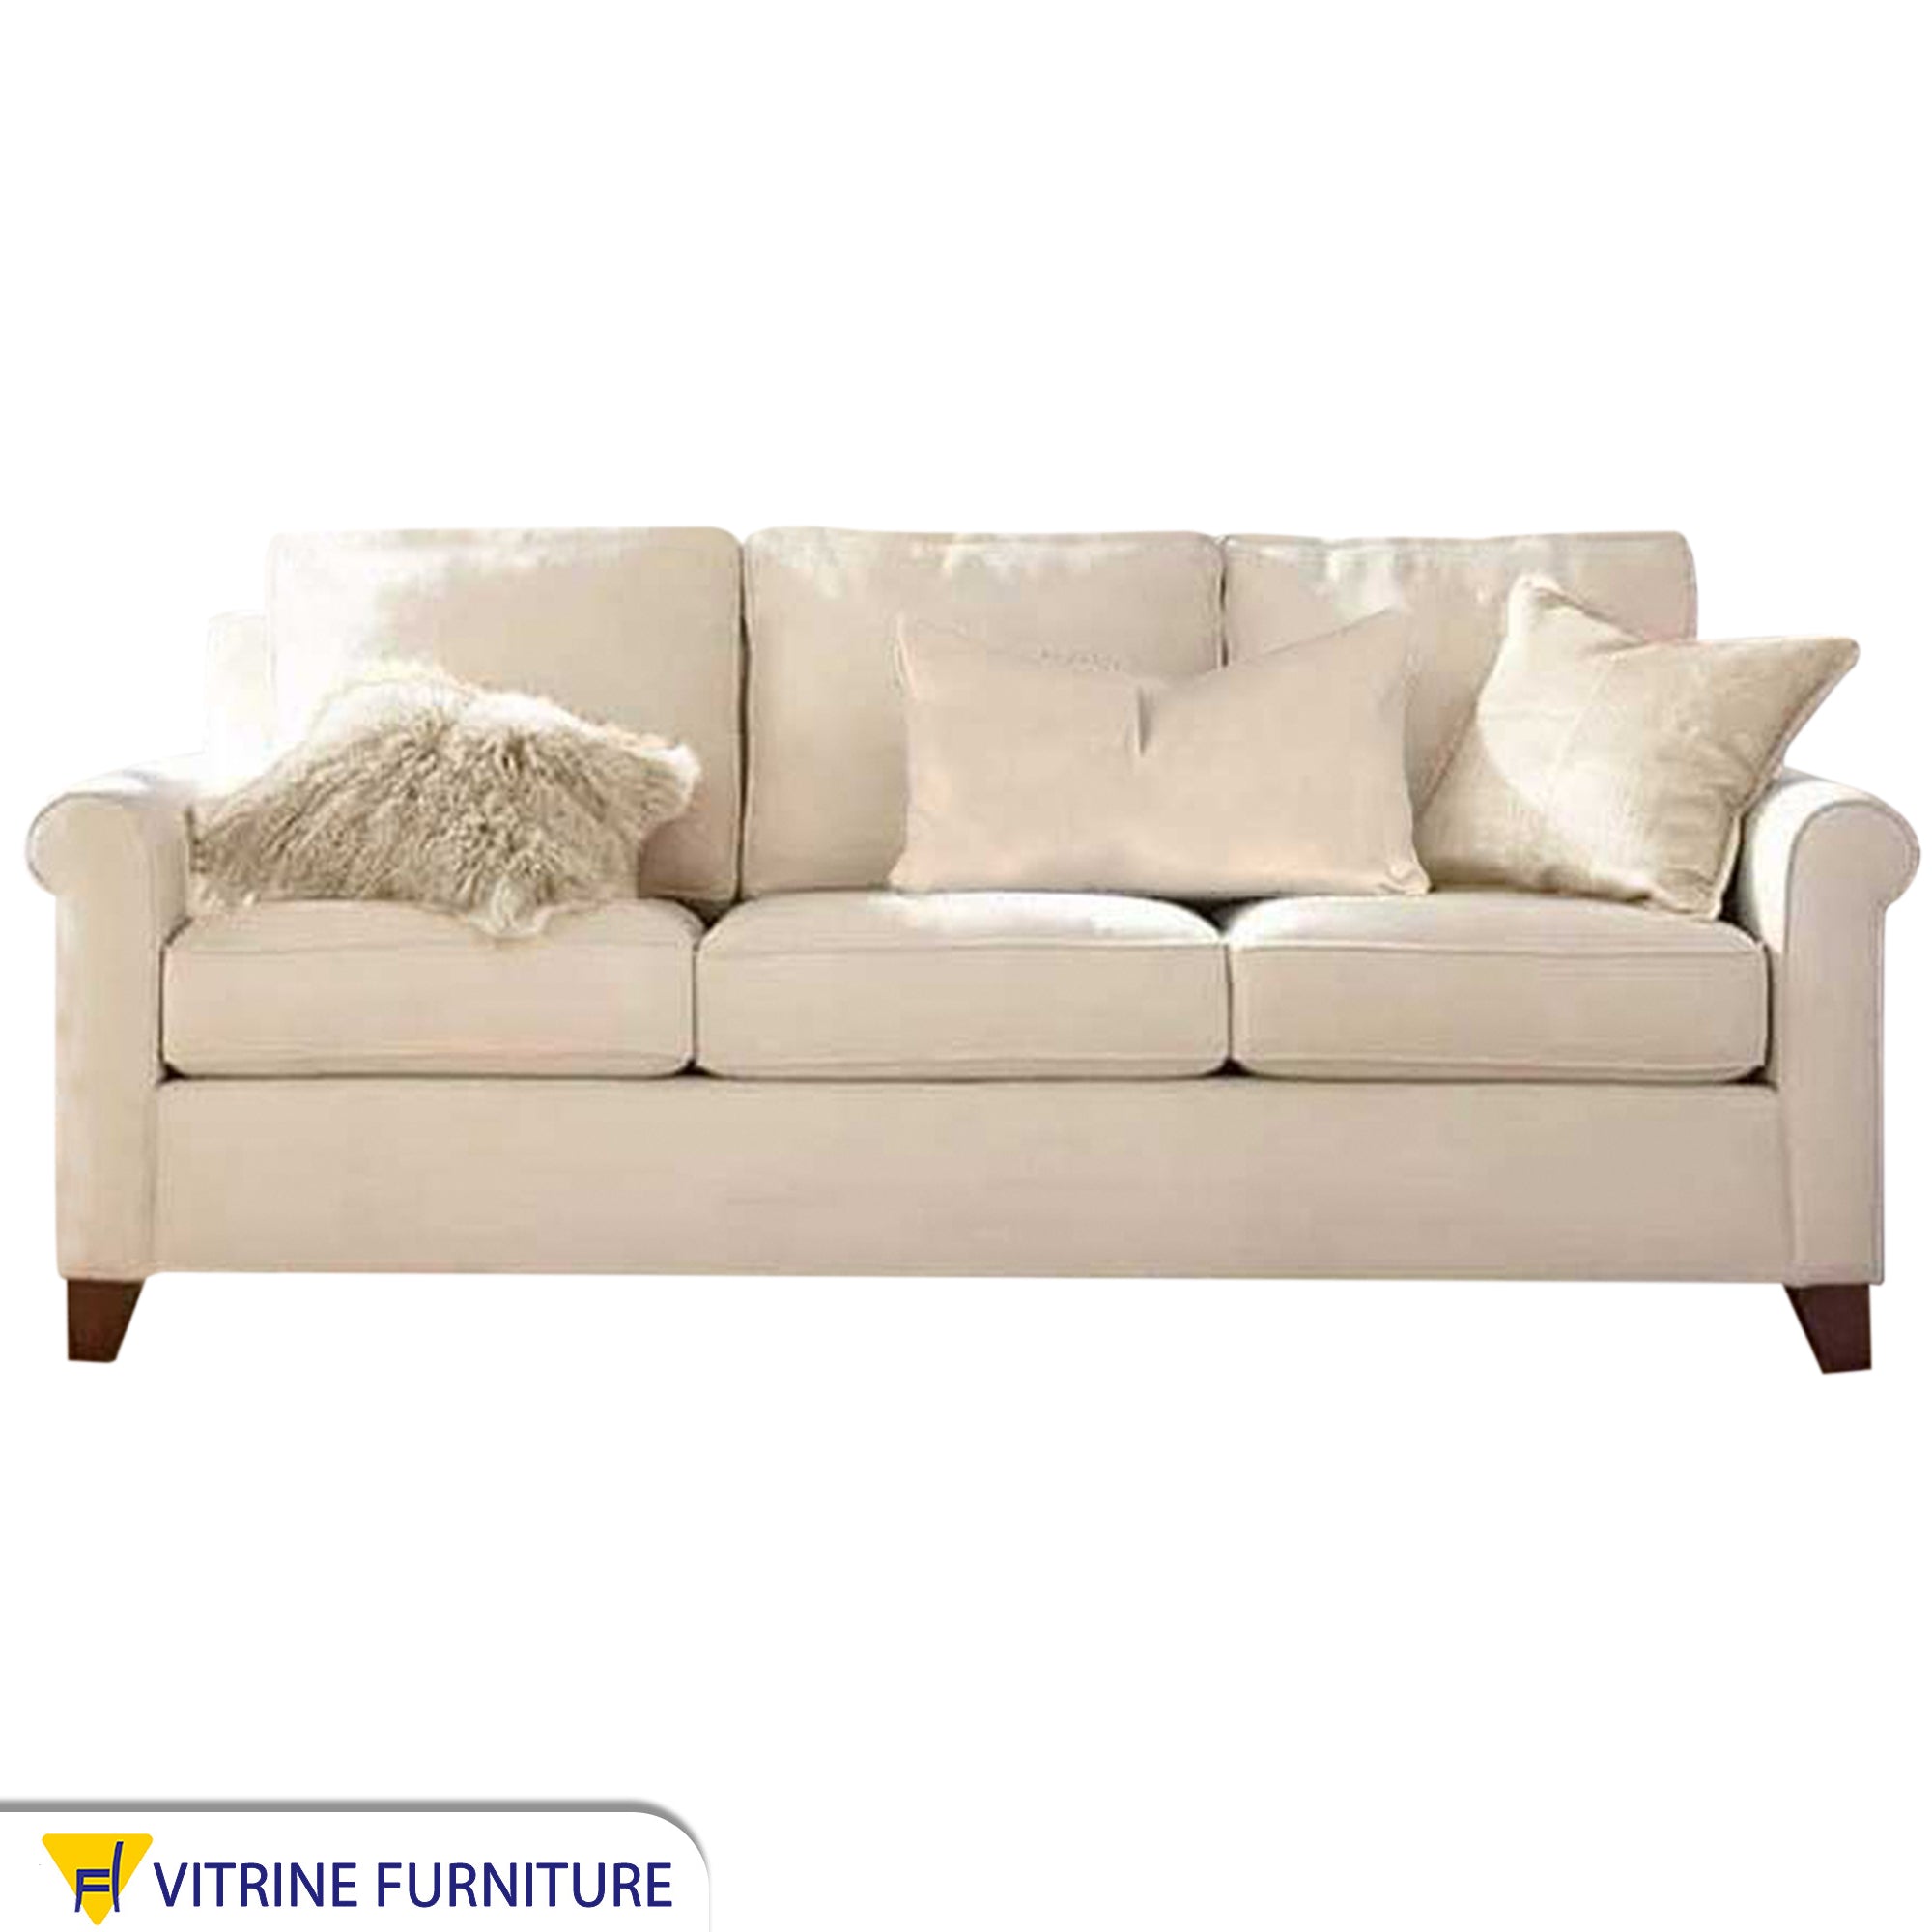 Triple sofa in beige color